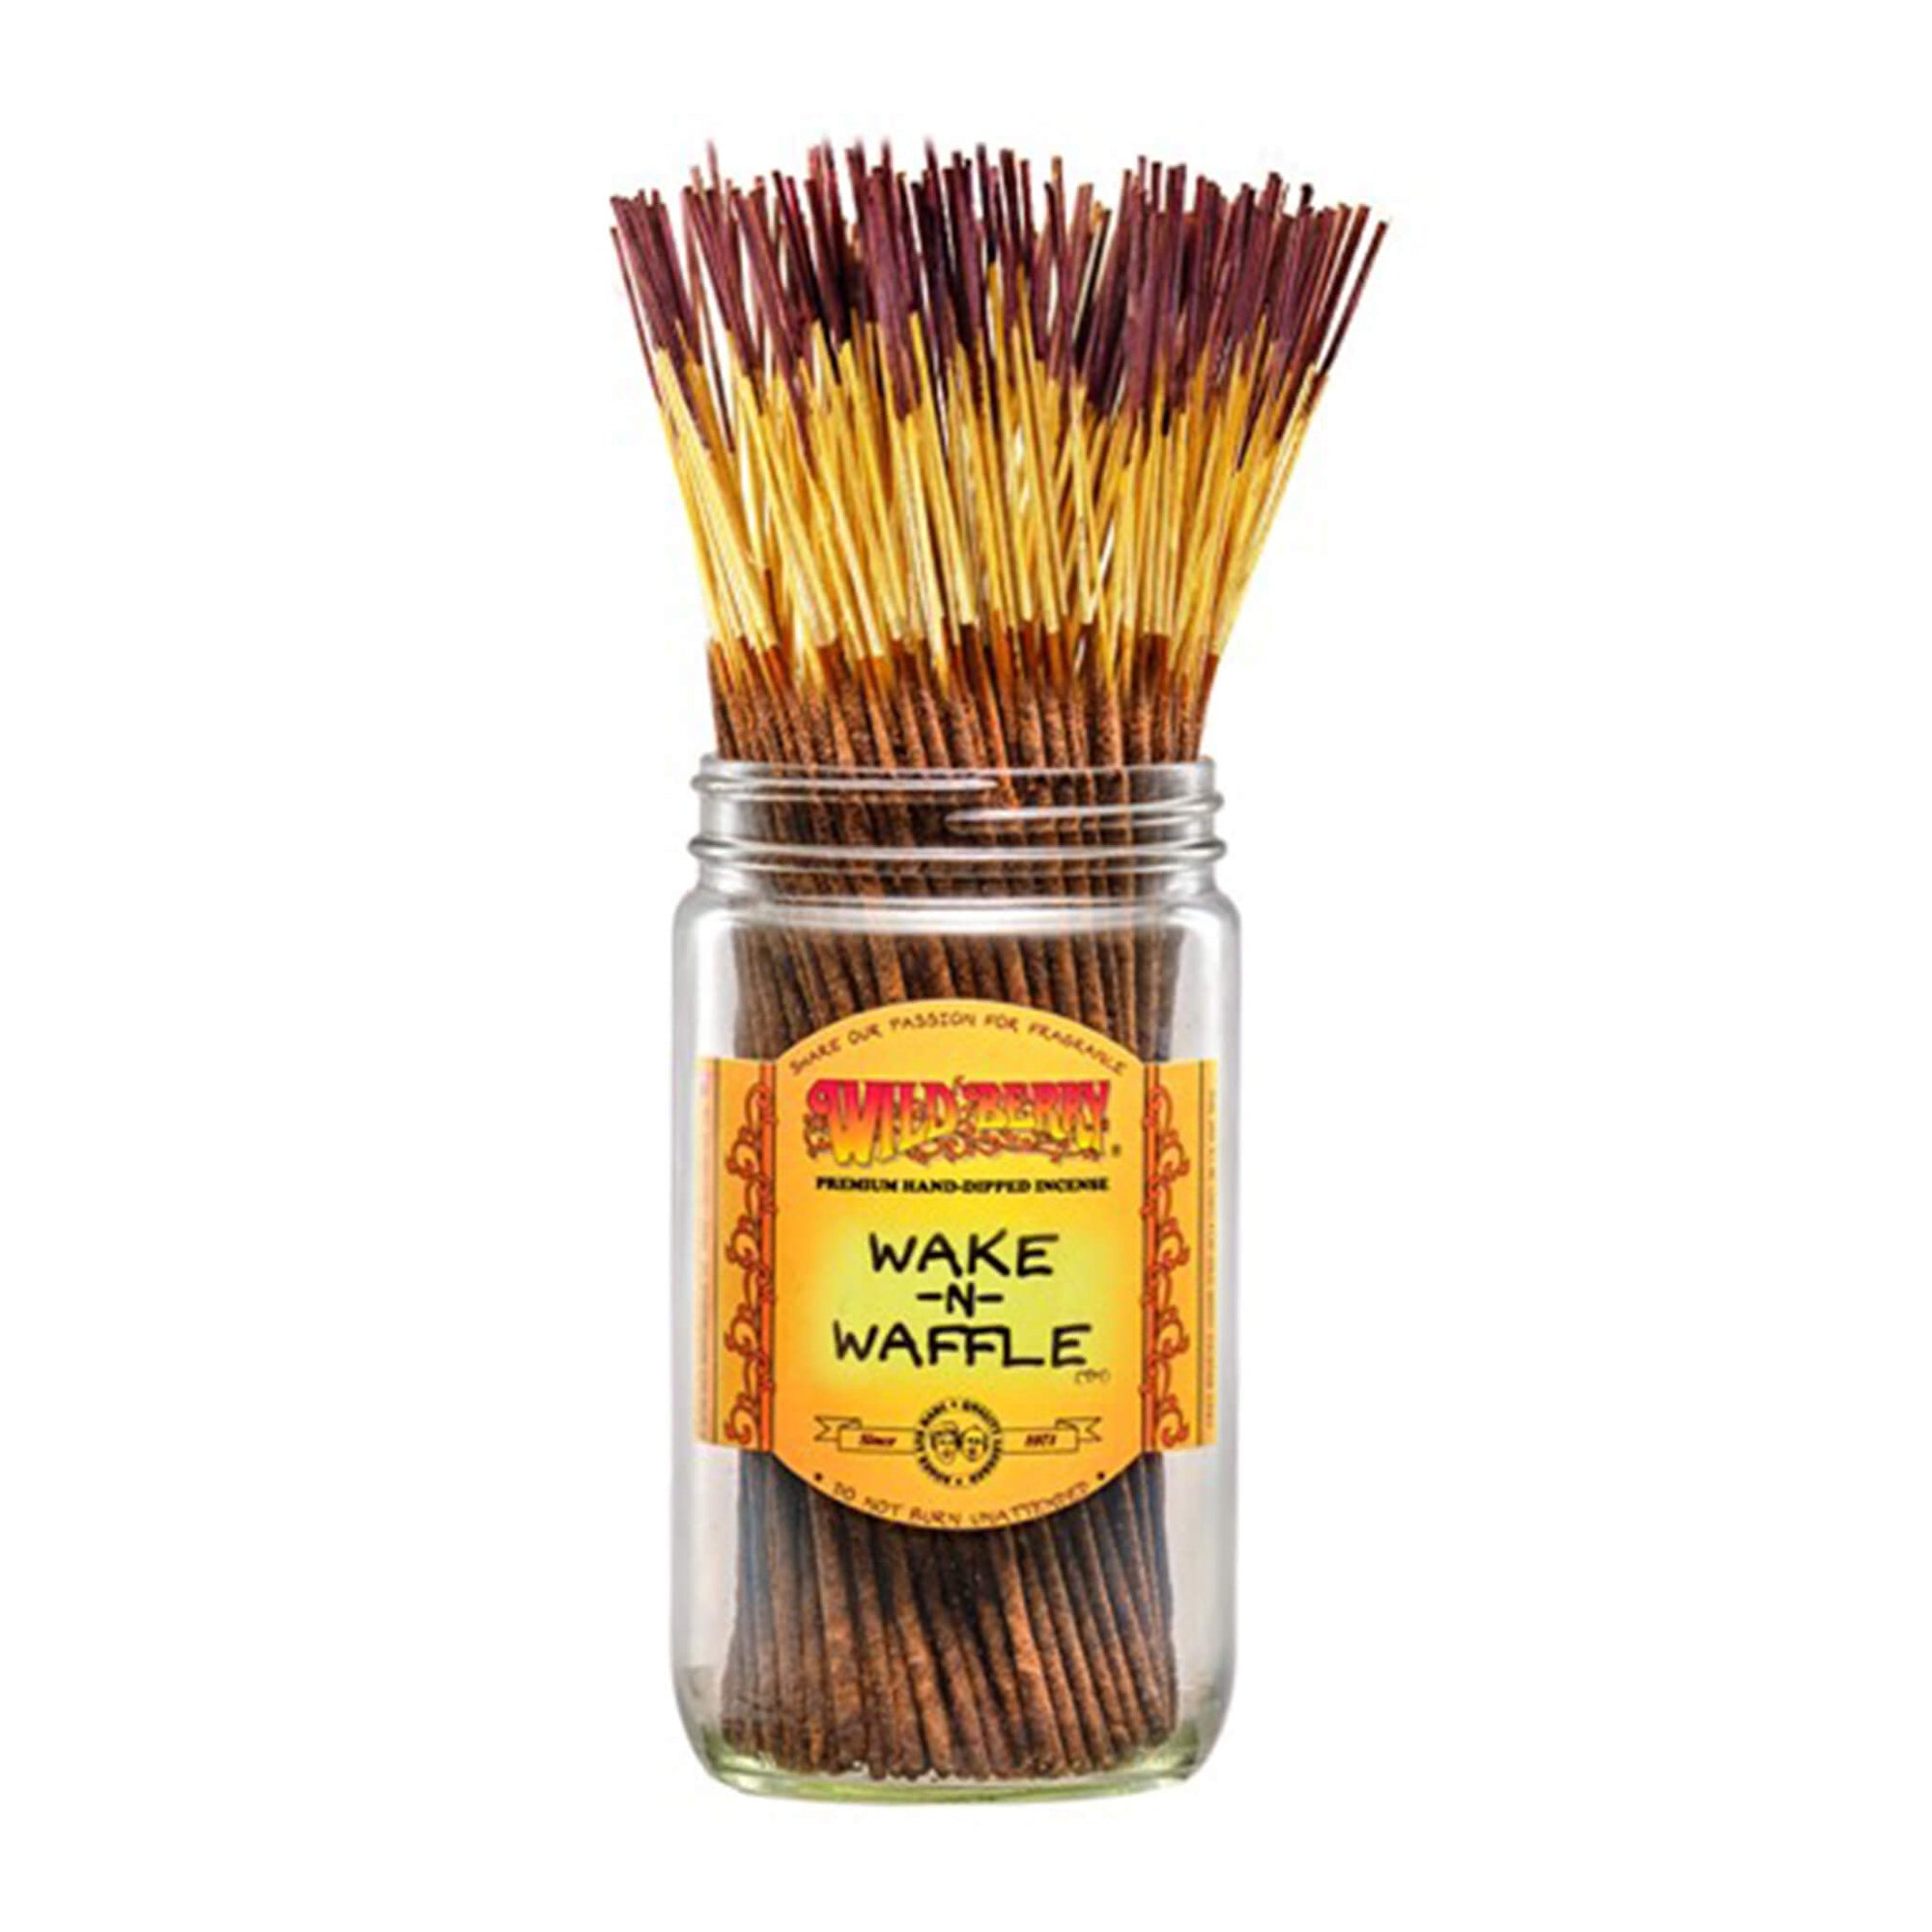 Wake -N- Waffle ™ Incense Sticks | Profile View In Jar | Dabbing Warehouse